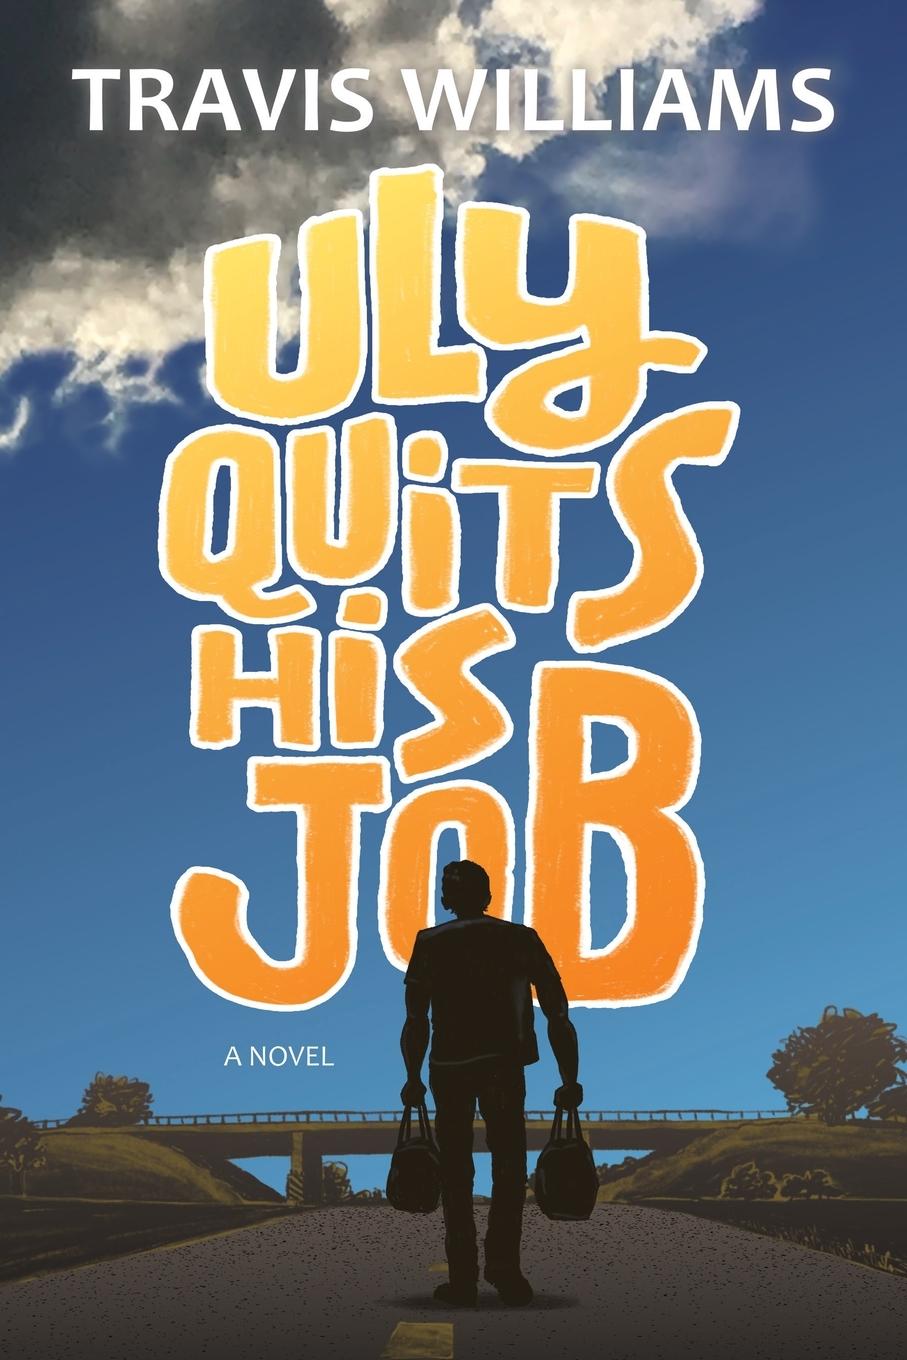 Kniha Uly Quits His Job 